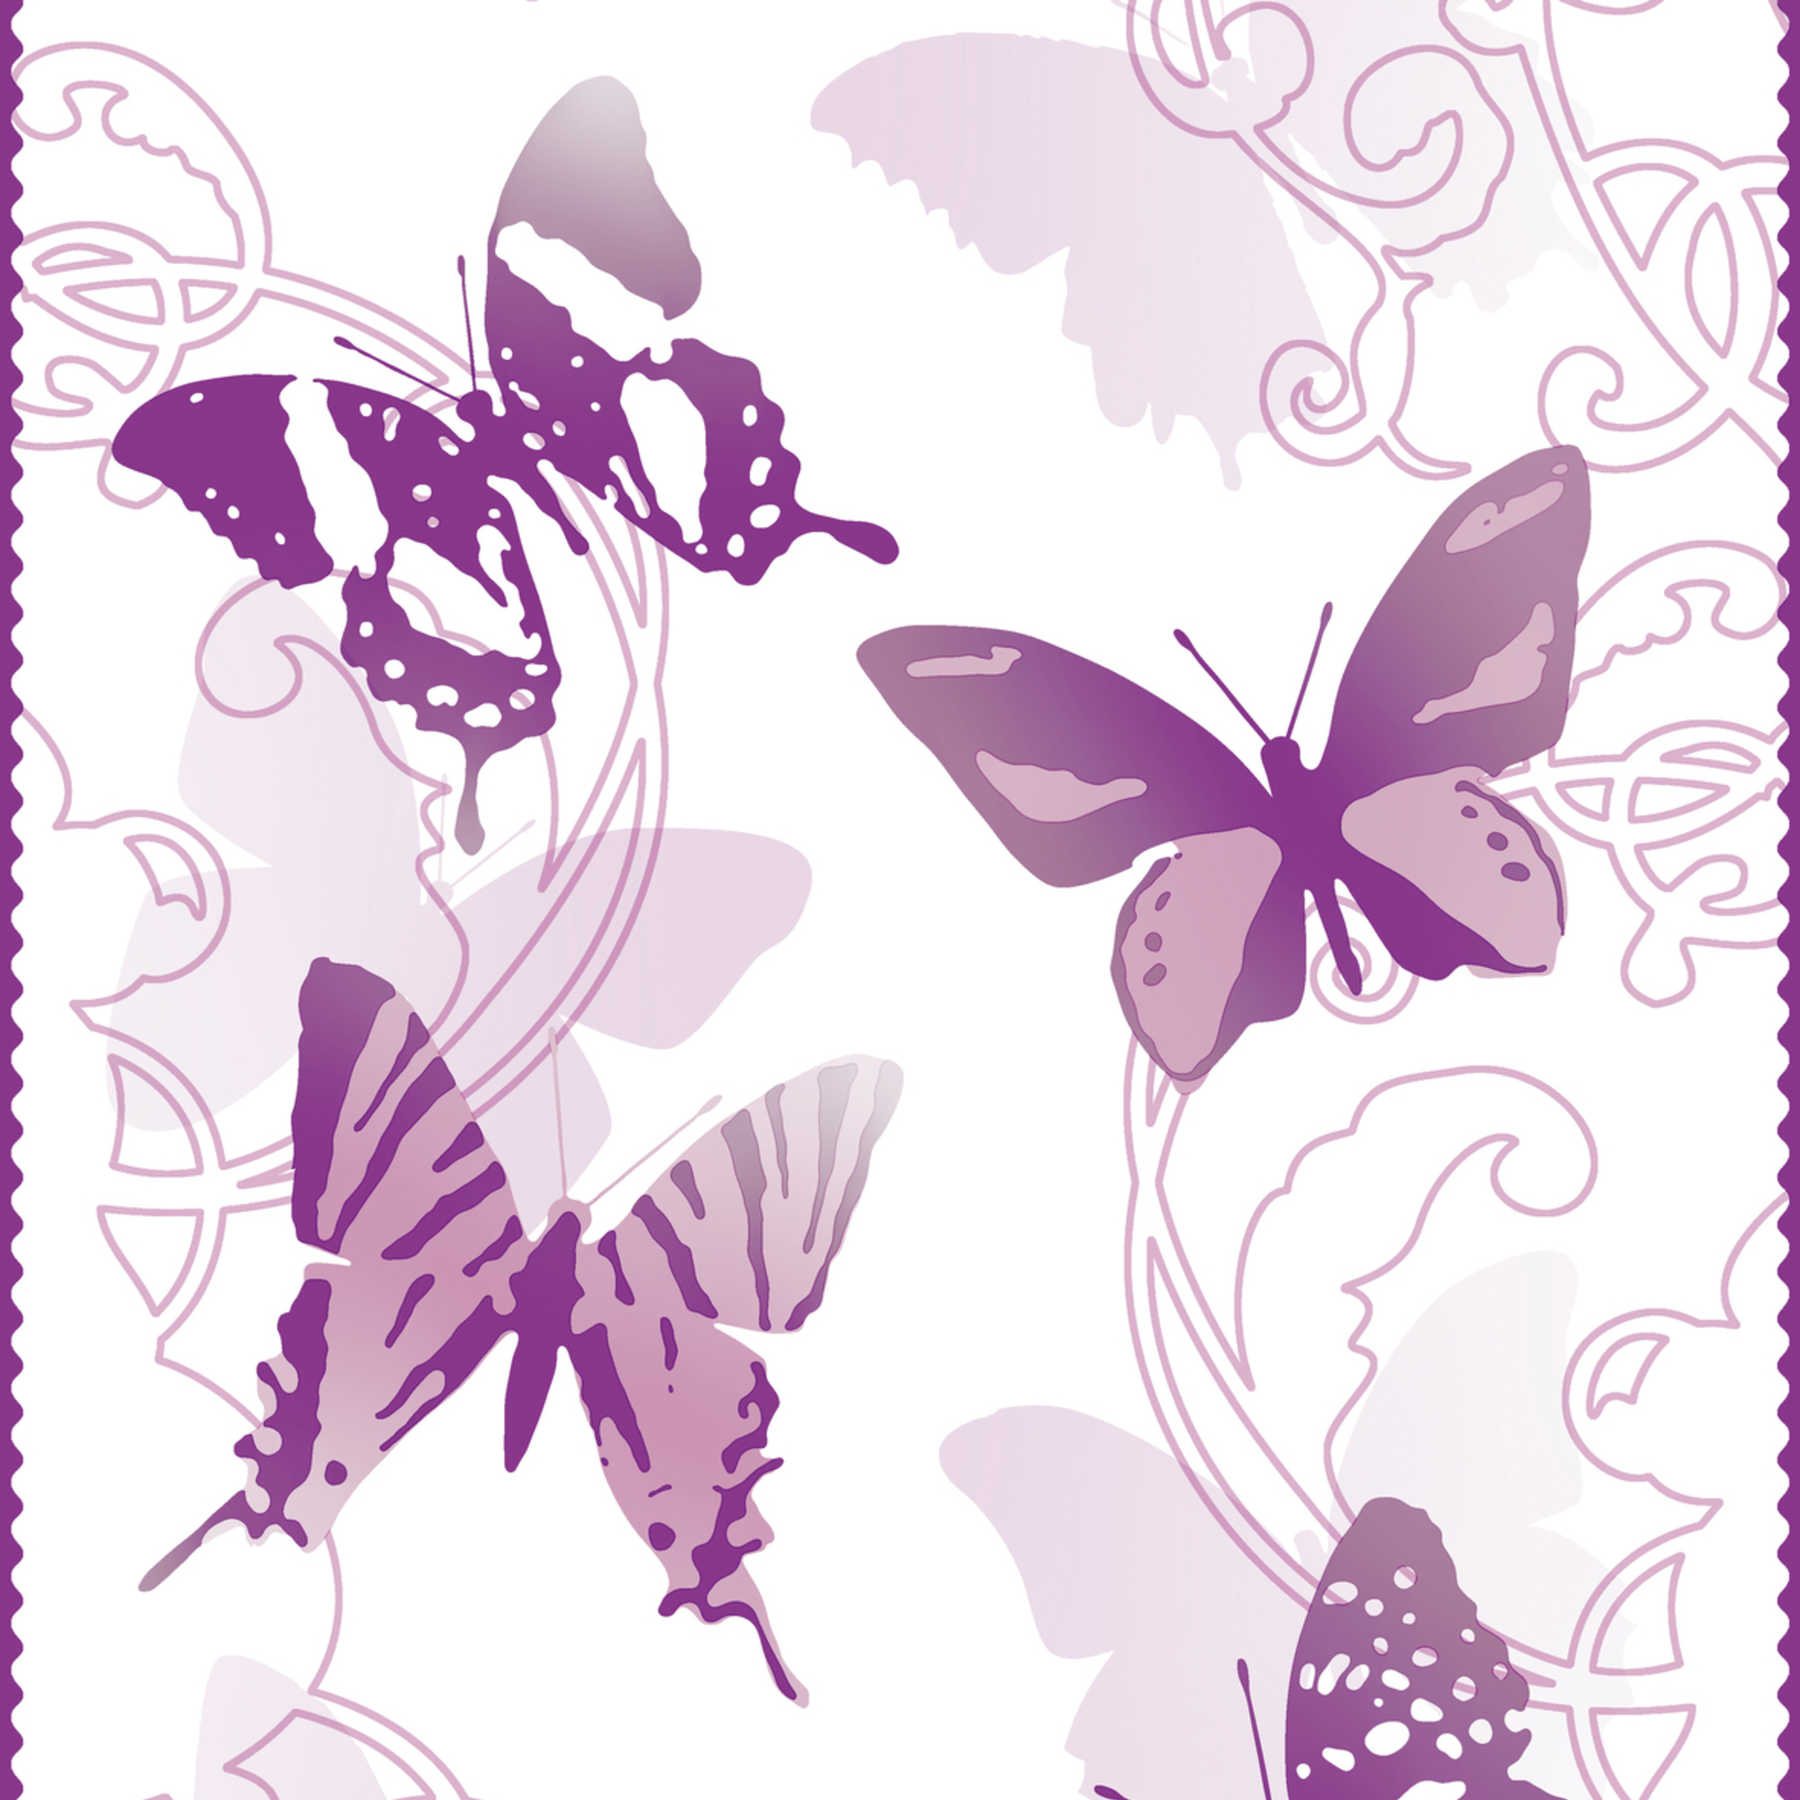             Butterfly wallpaper graphic pattern for girls - purple
        